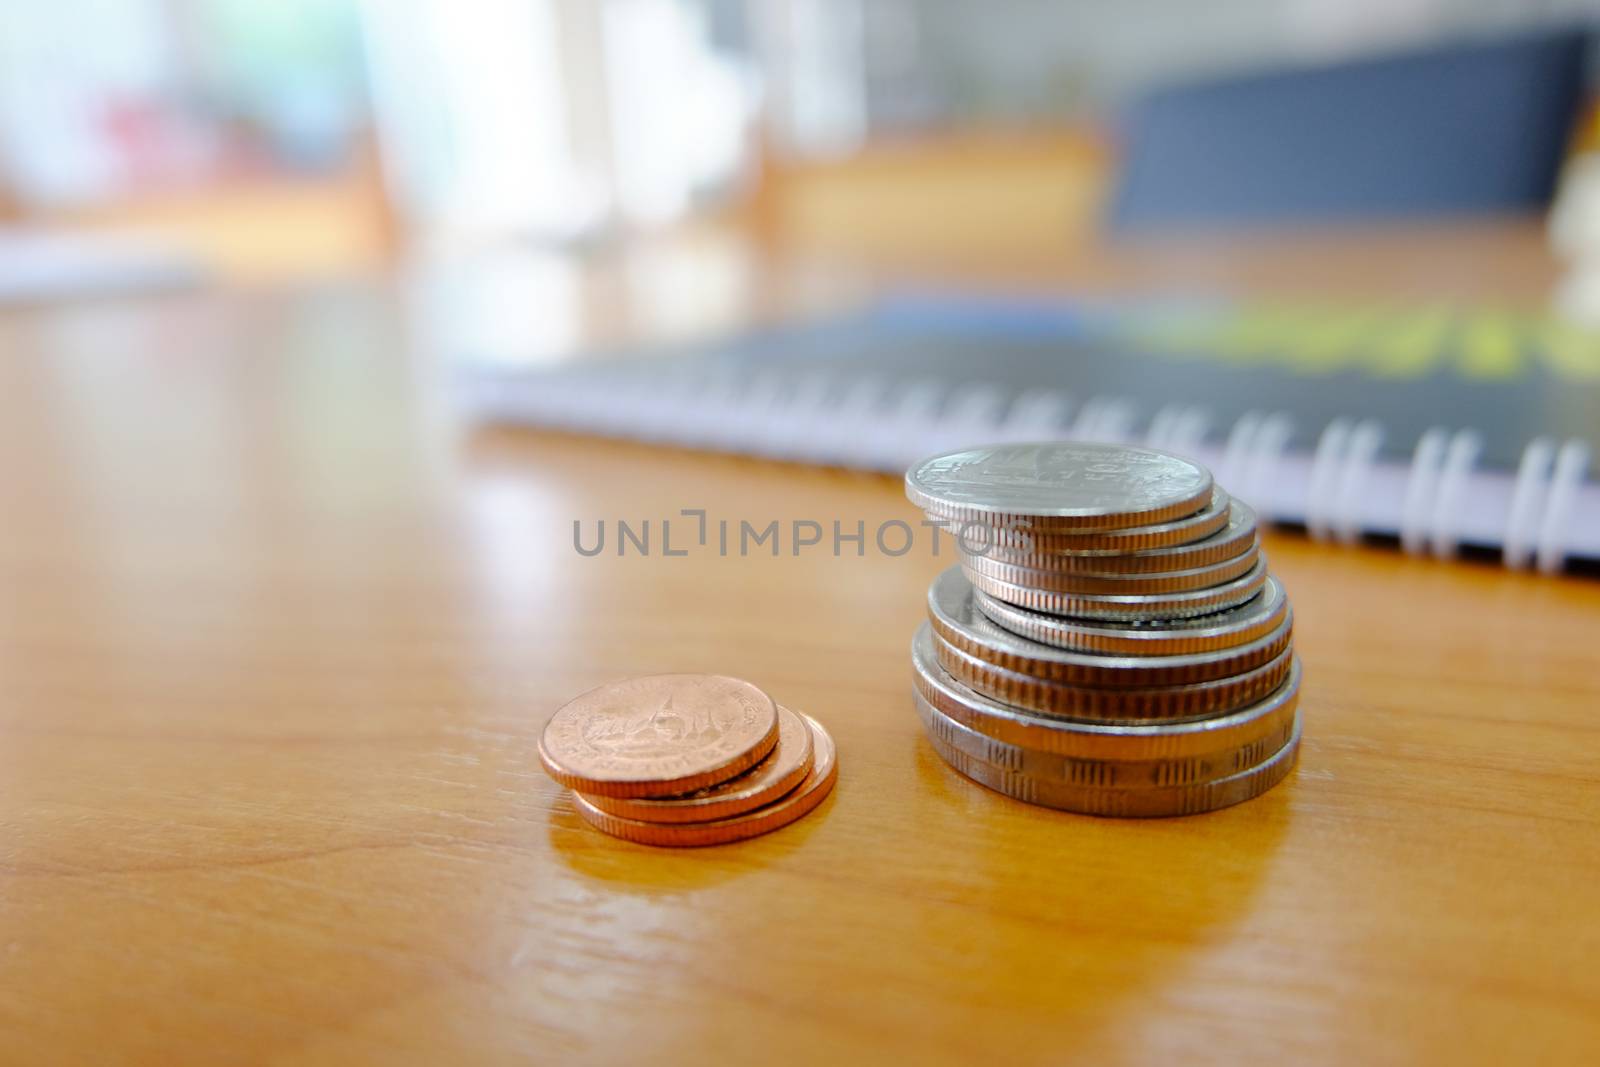 Baht coins on wooden floor